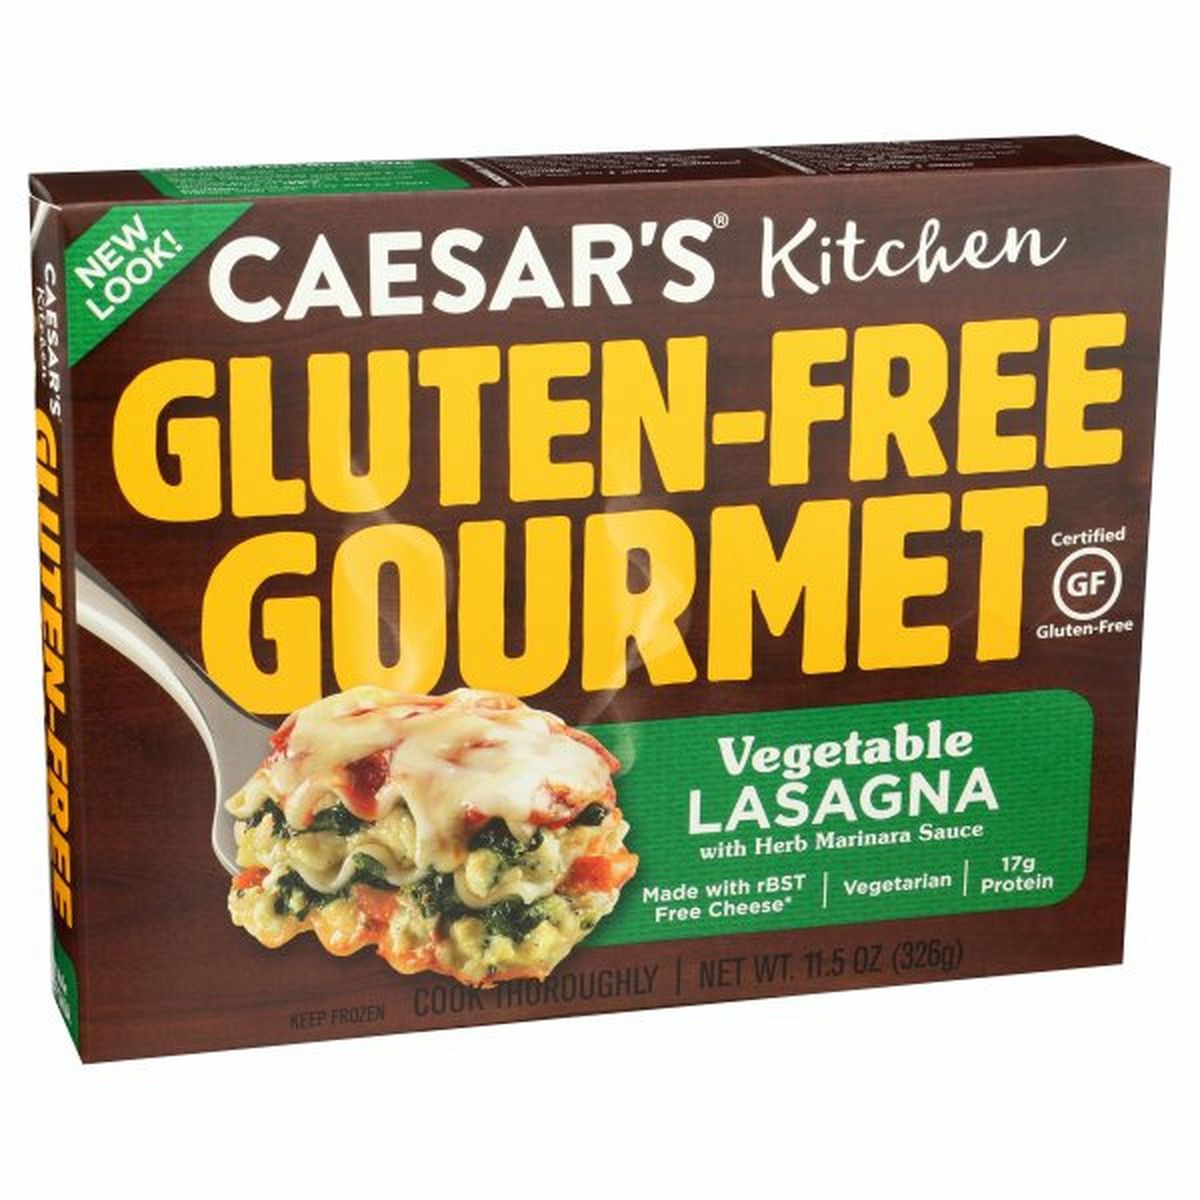 Calories in Caesars Kitchen Lasagna, Gluten-Free Gourmet, Vegetable